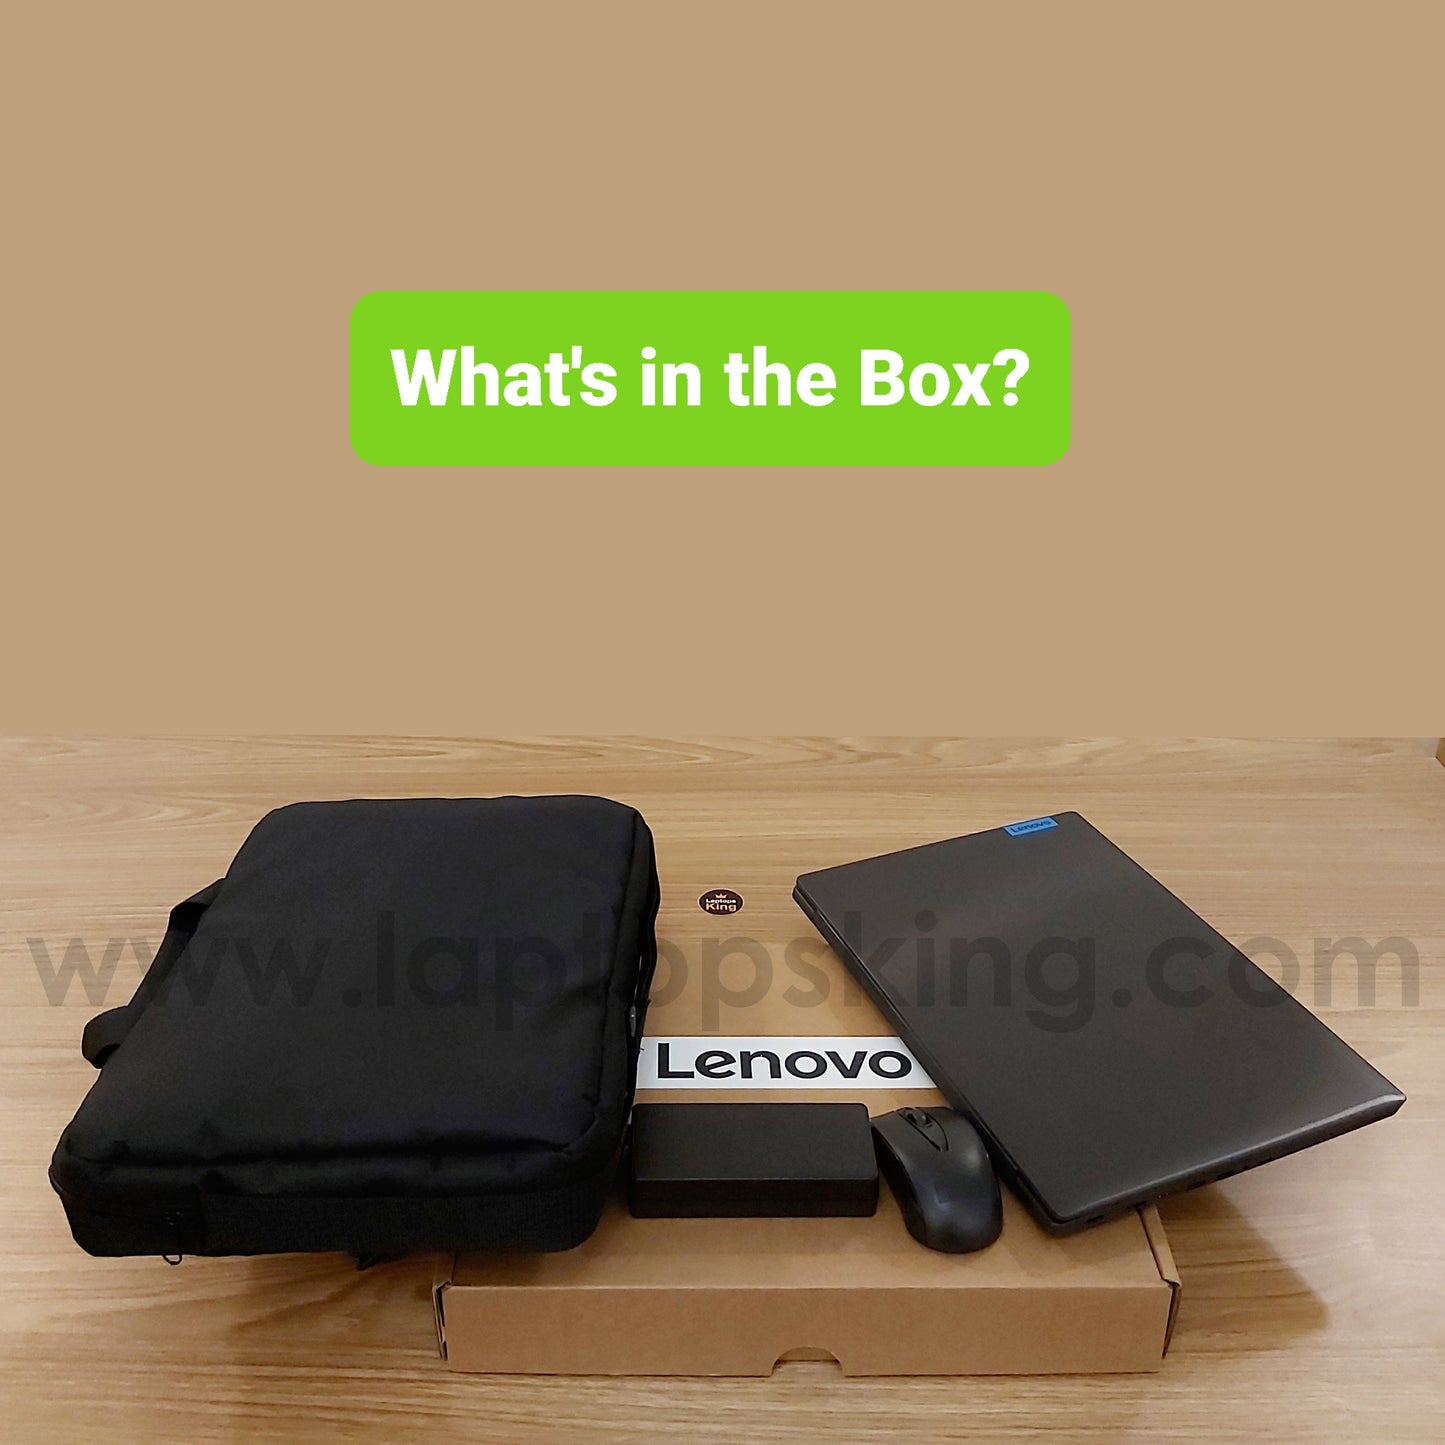 Lenovo IdeaPad L340 81LK i7- 9750H Gtx 1650 Gaming Laptop (New Open Box)